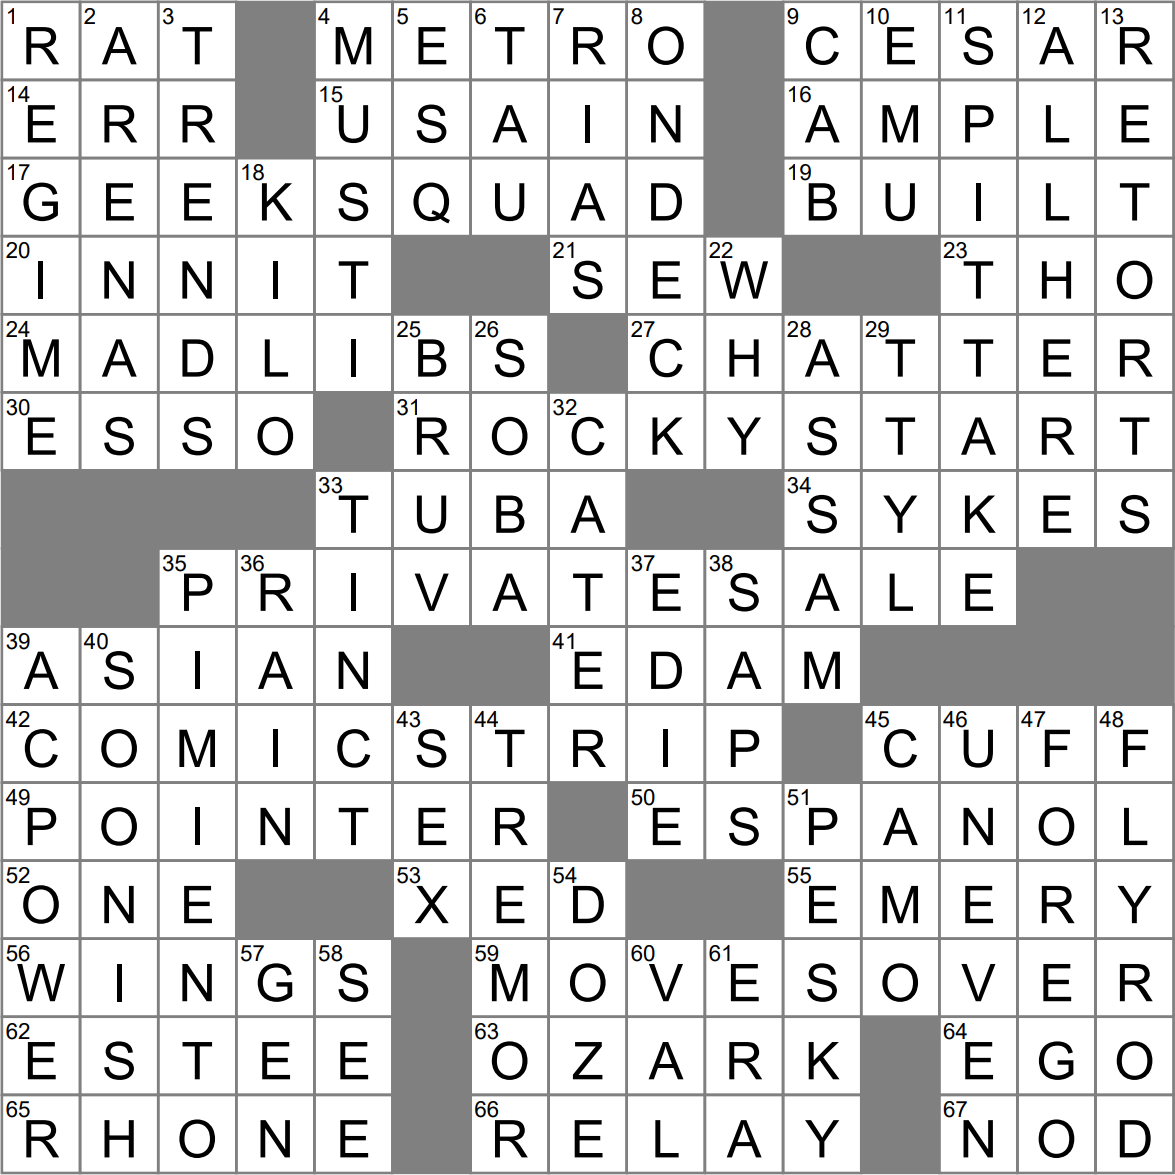 la-times-crossword-12-may-23-friday-laxcrossword